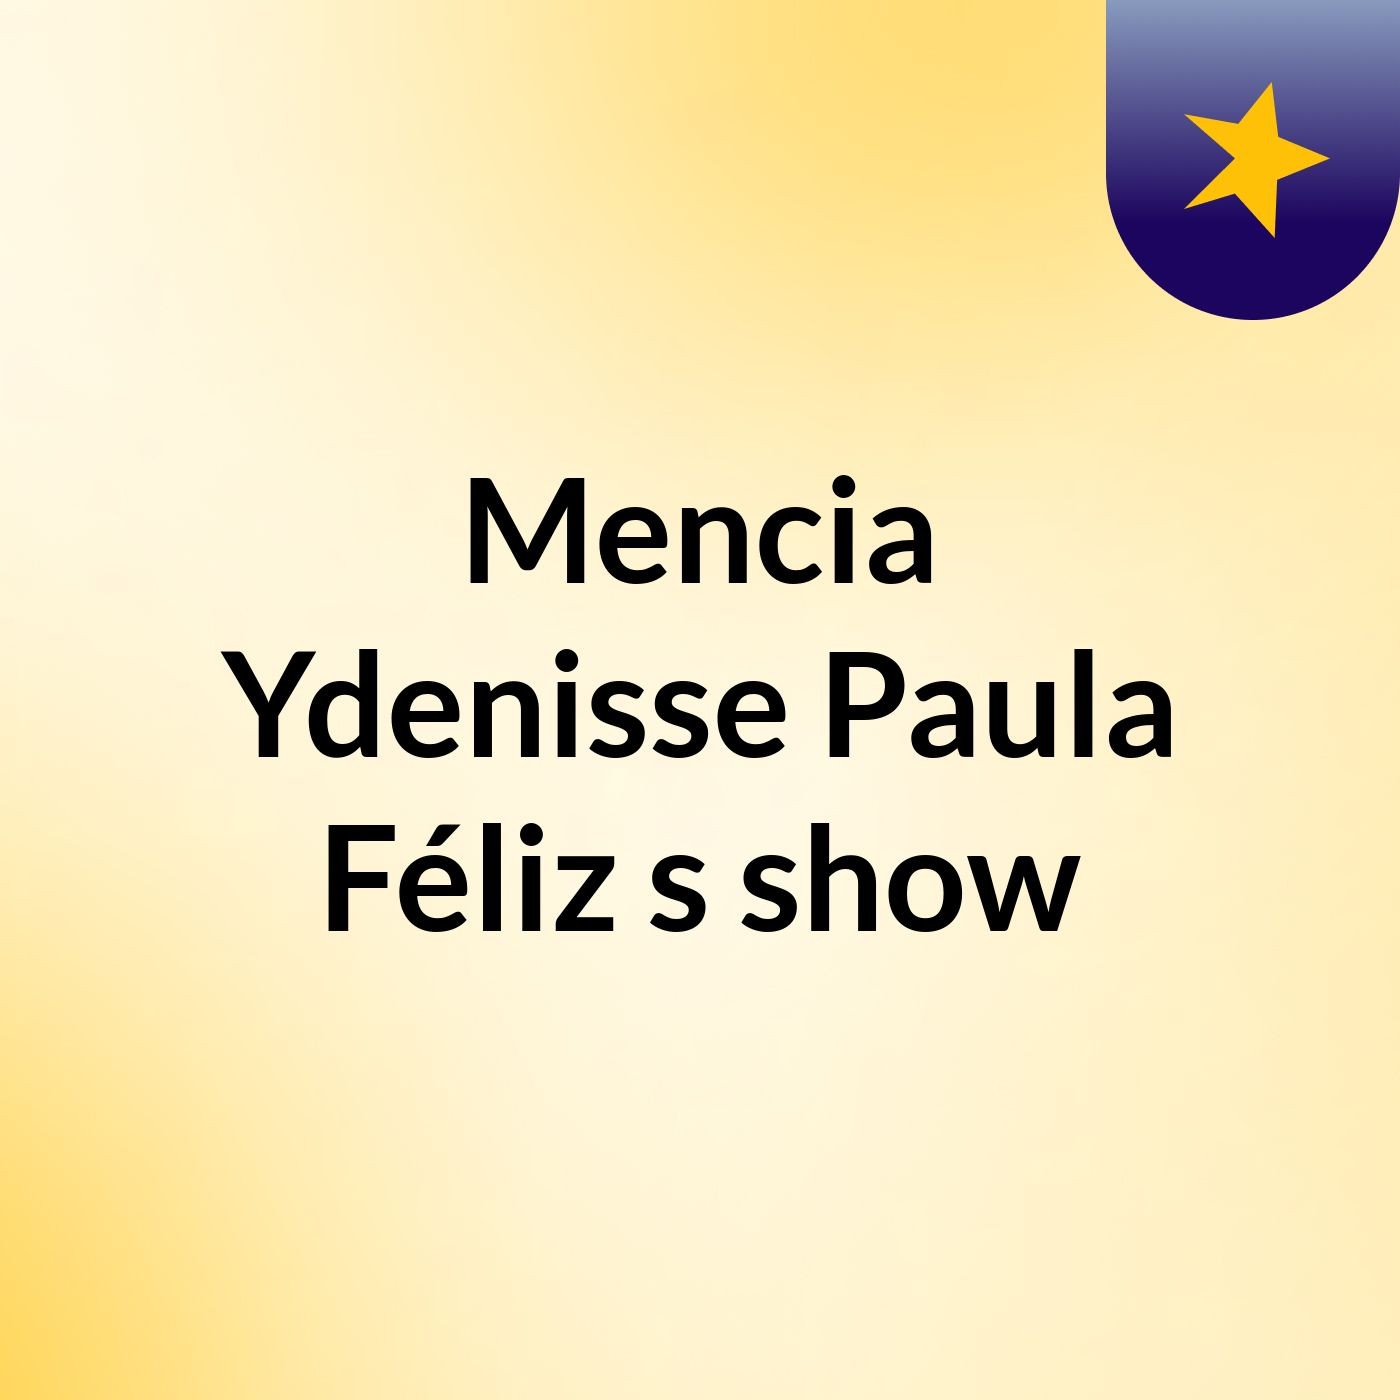 Mencia Ydenisse Paula Féliz's show